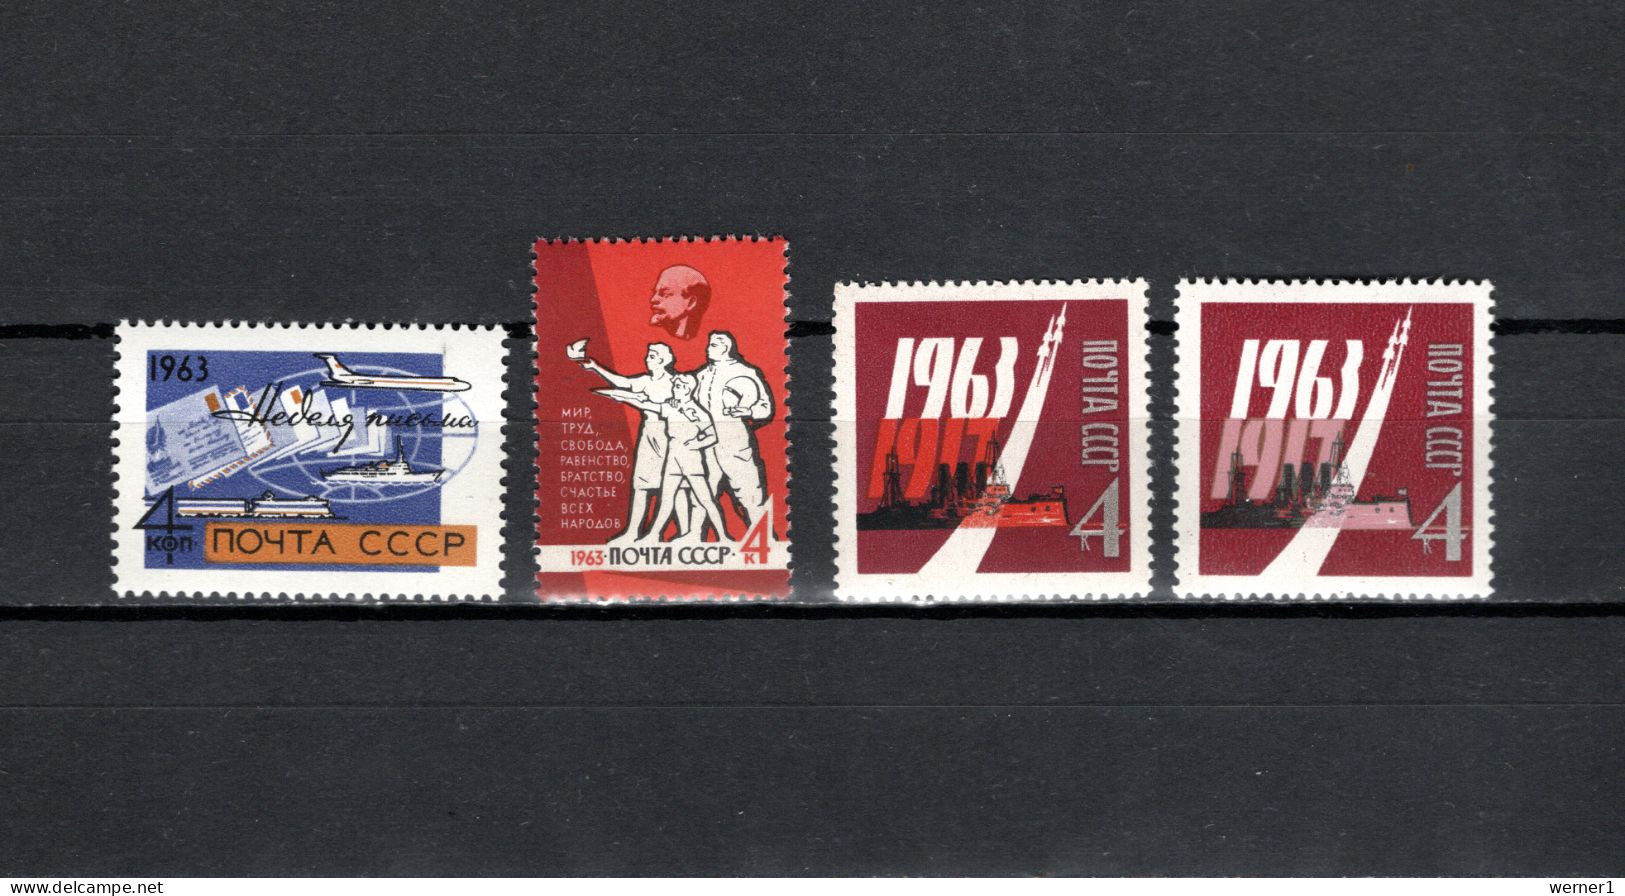 USSR Russia 1963 Space, Letter Week, Cosmonaut, October Revolution 46th Anniv. 4 Stamps MNH - UdSSR